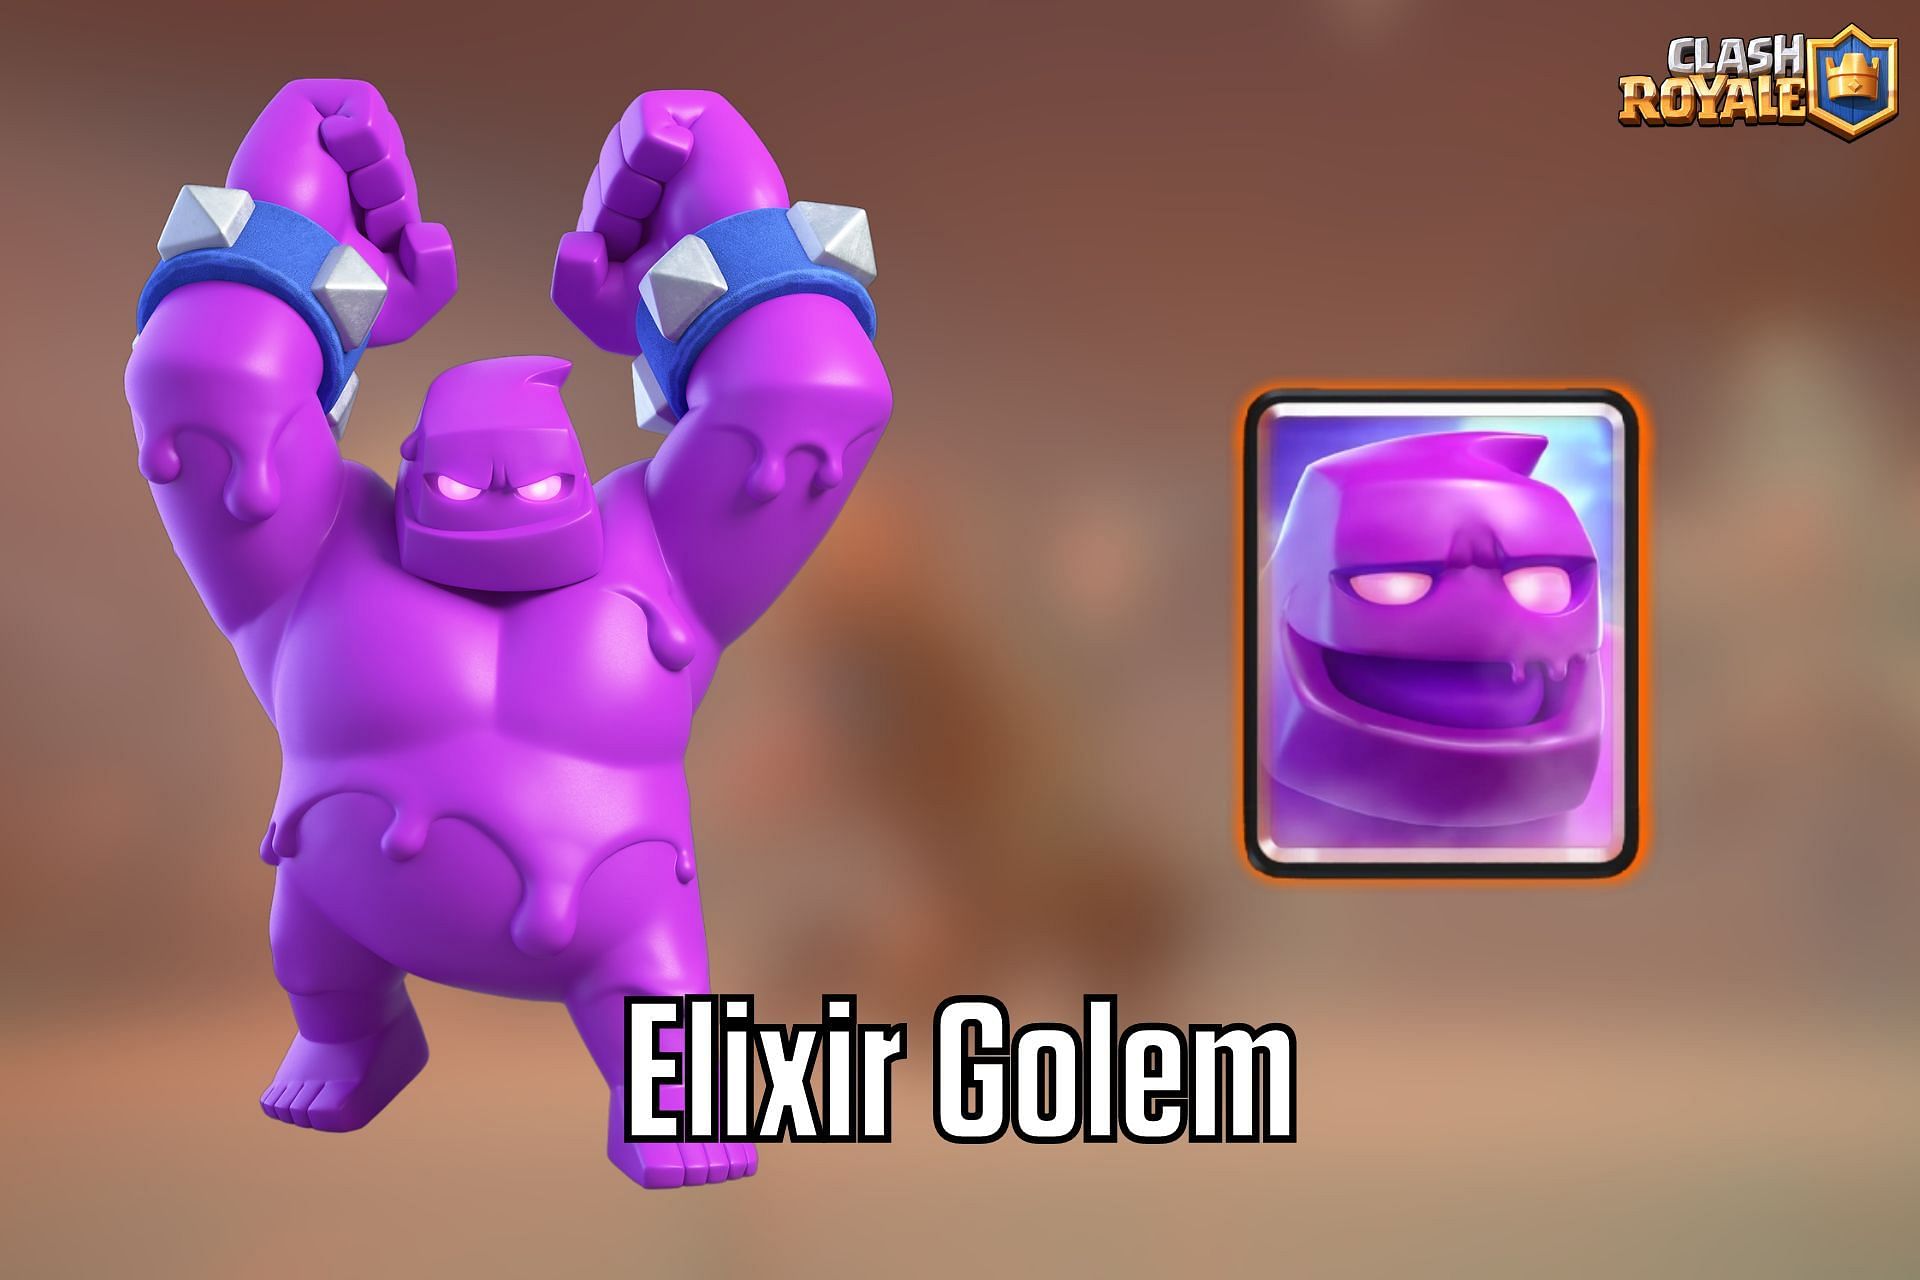 Unlock the Elixir Golem card in Clash Royale (Image via Sportskeeda)